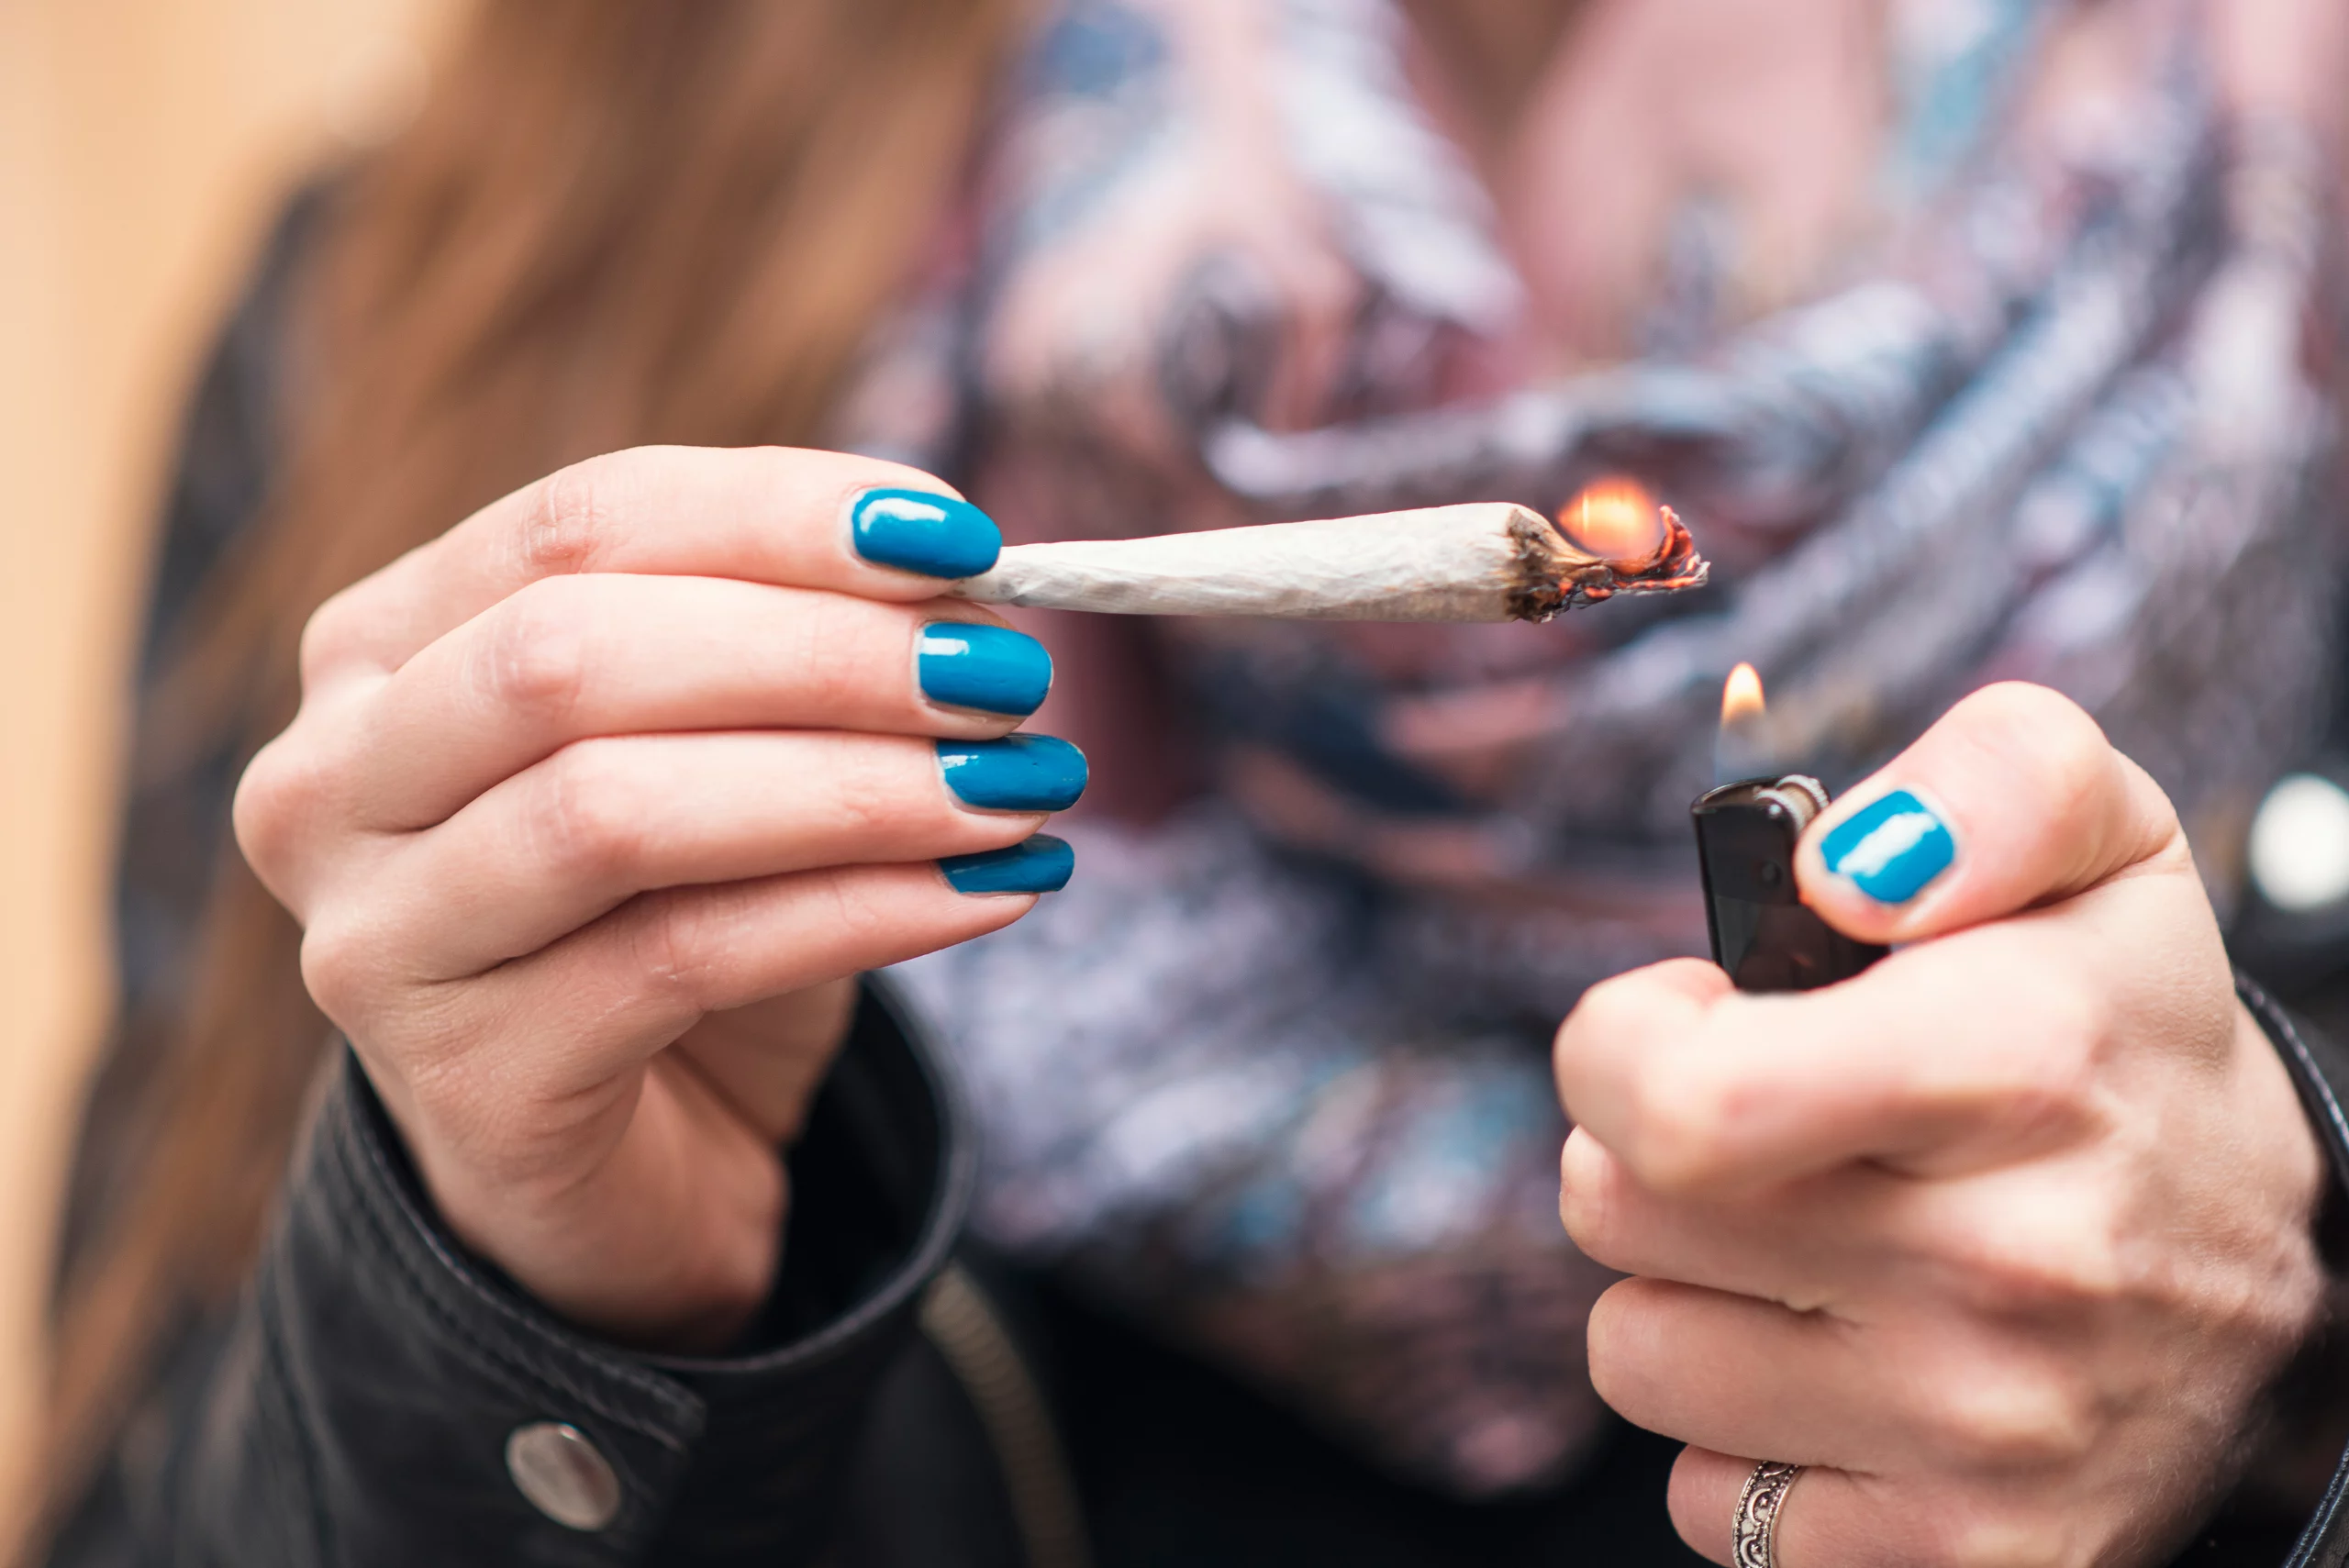 Adult Use Cannabis Legalization